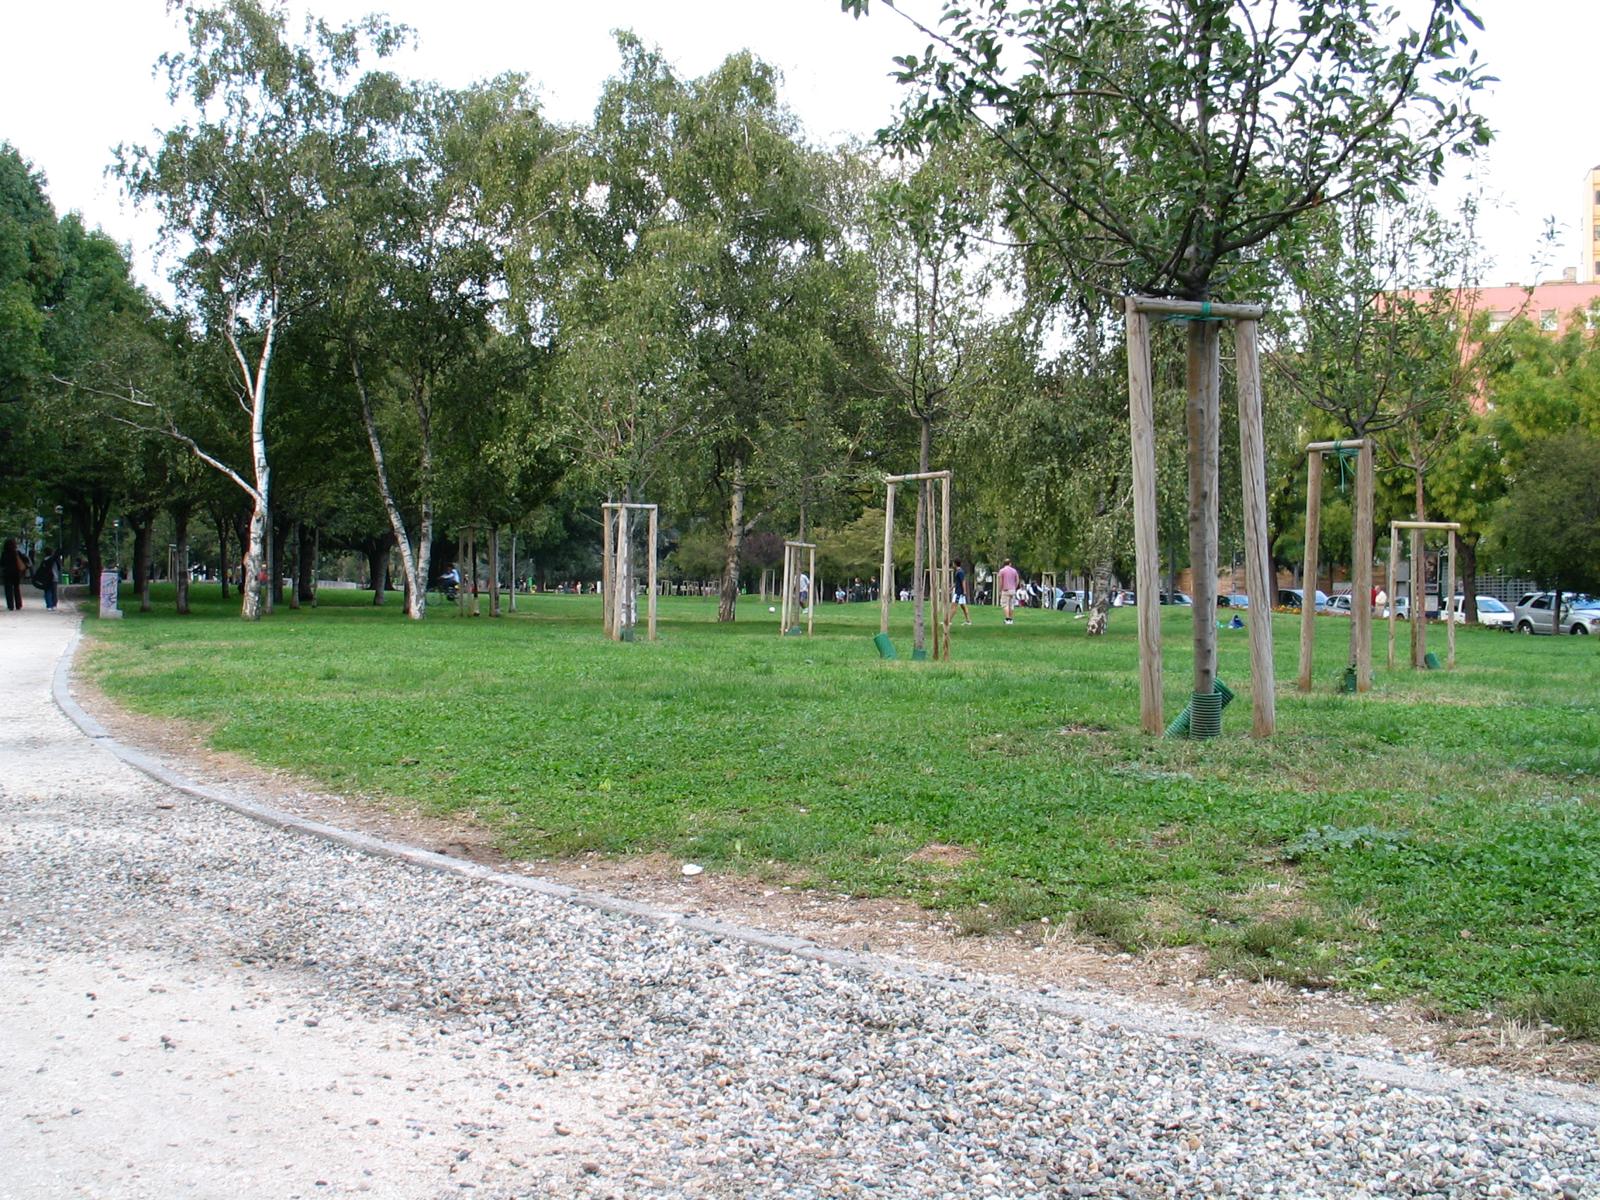 Small park